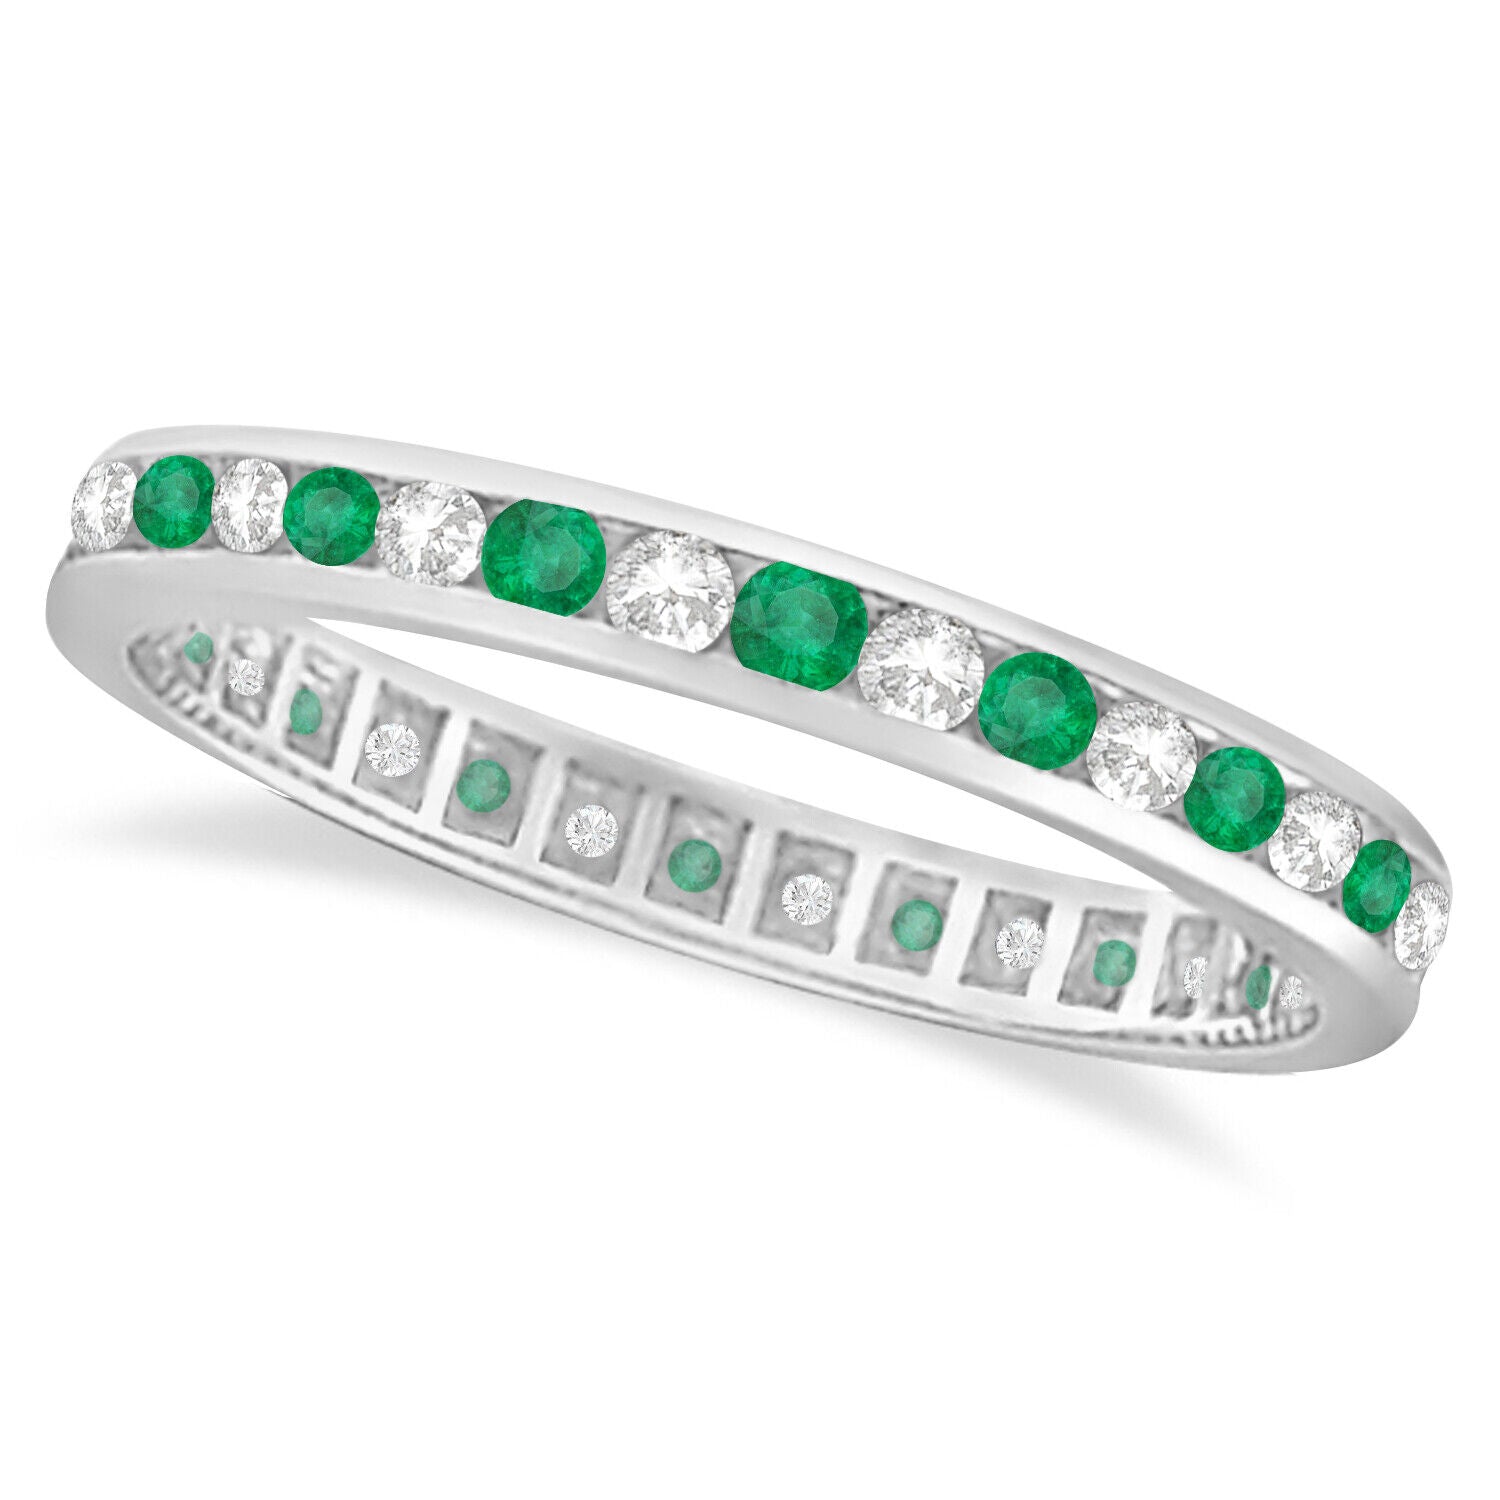 Stunning Emerald Diamond Ring for New York connoisseurs by Davizi Jewels